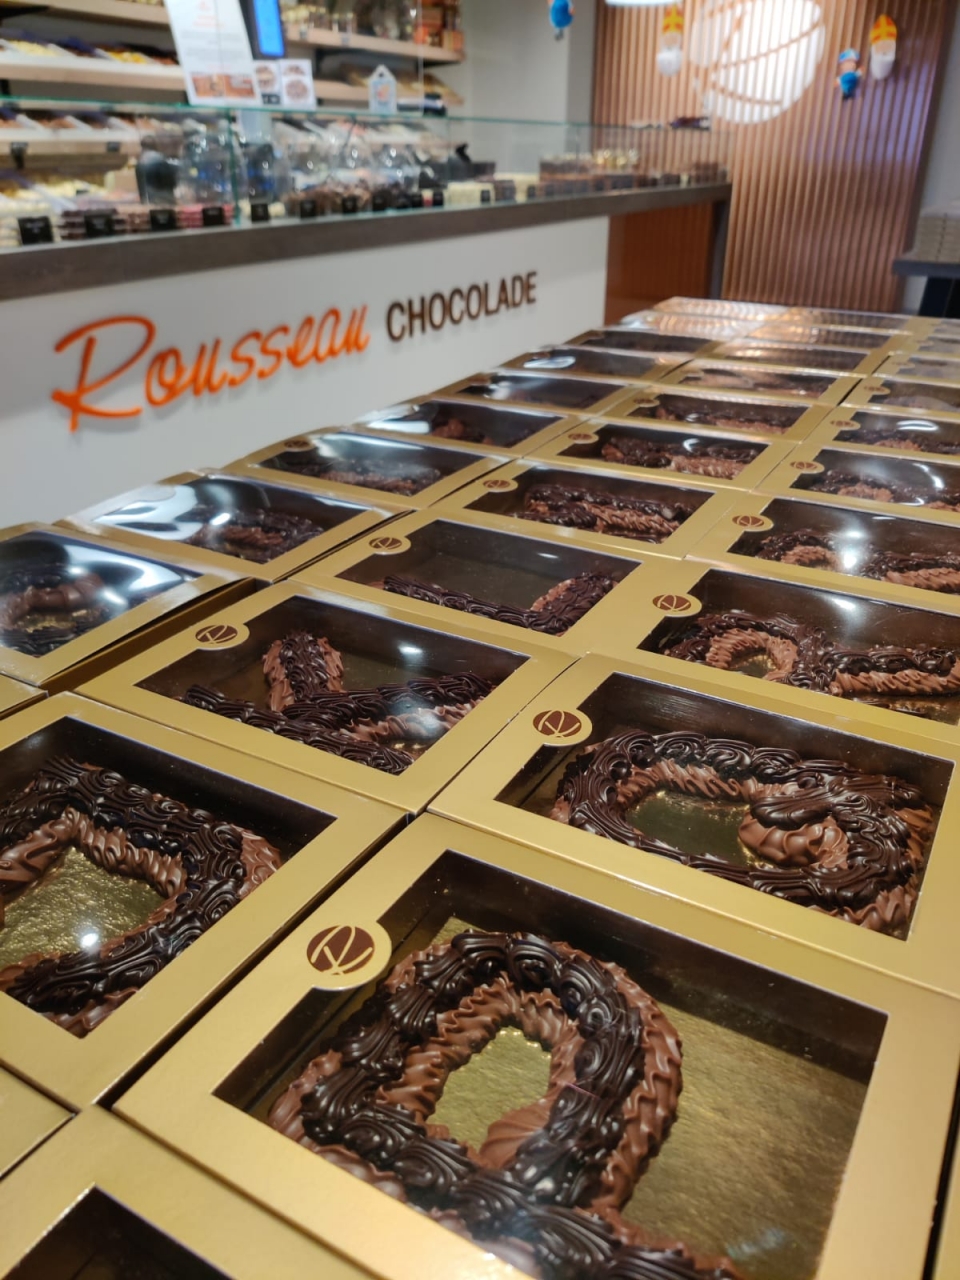 Koopzondagen Rousseau Chocolade